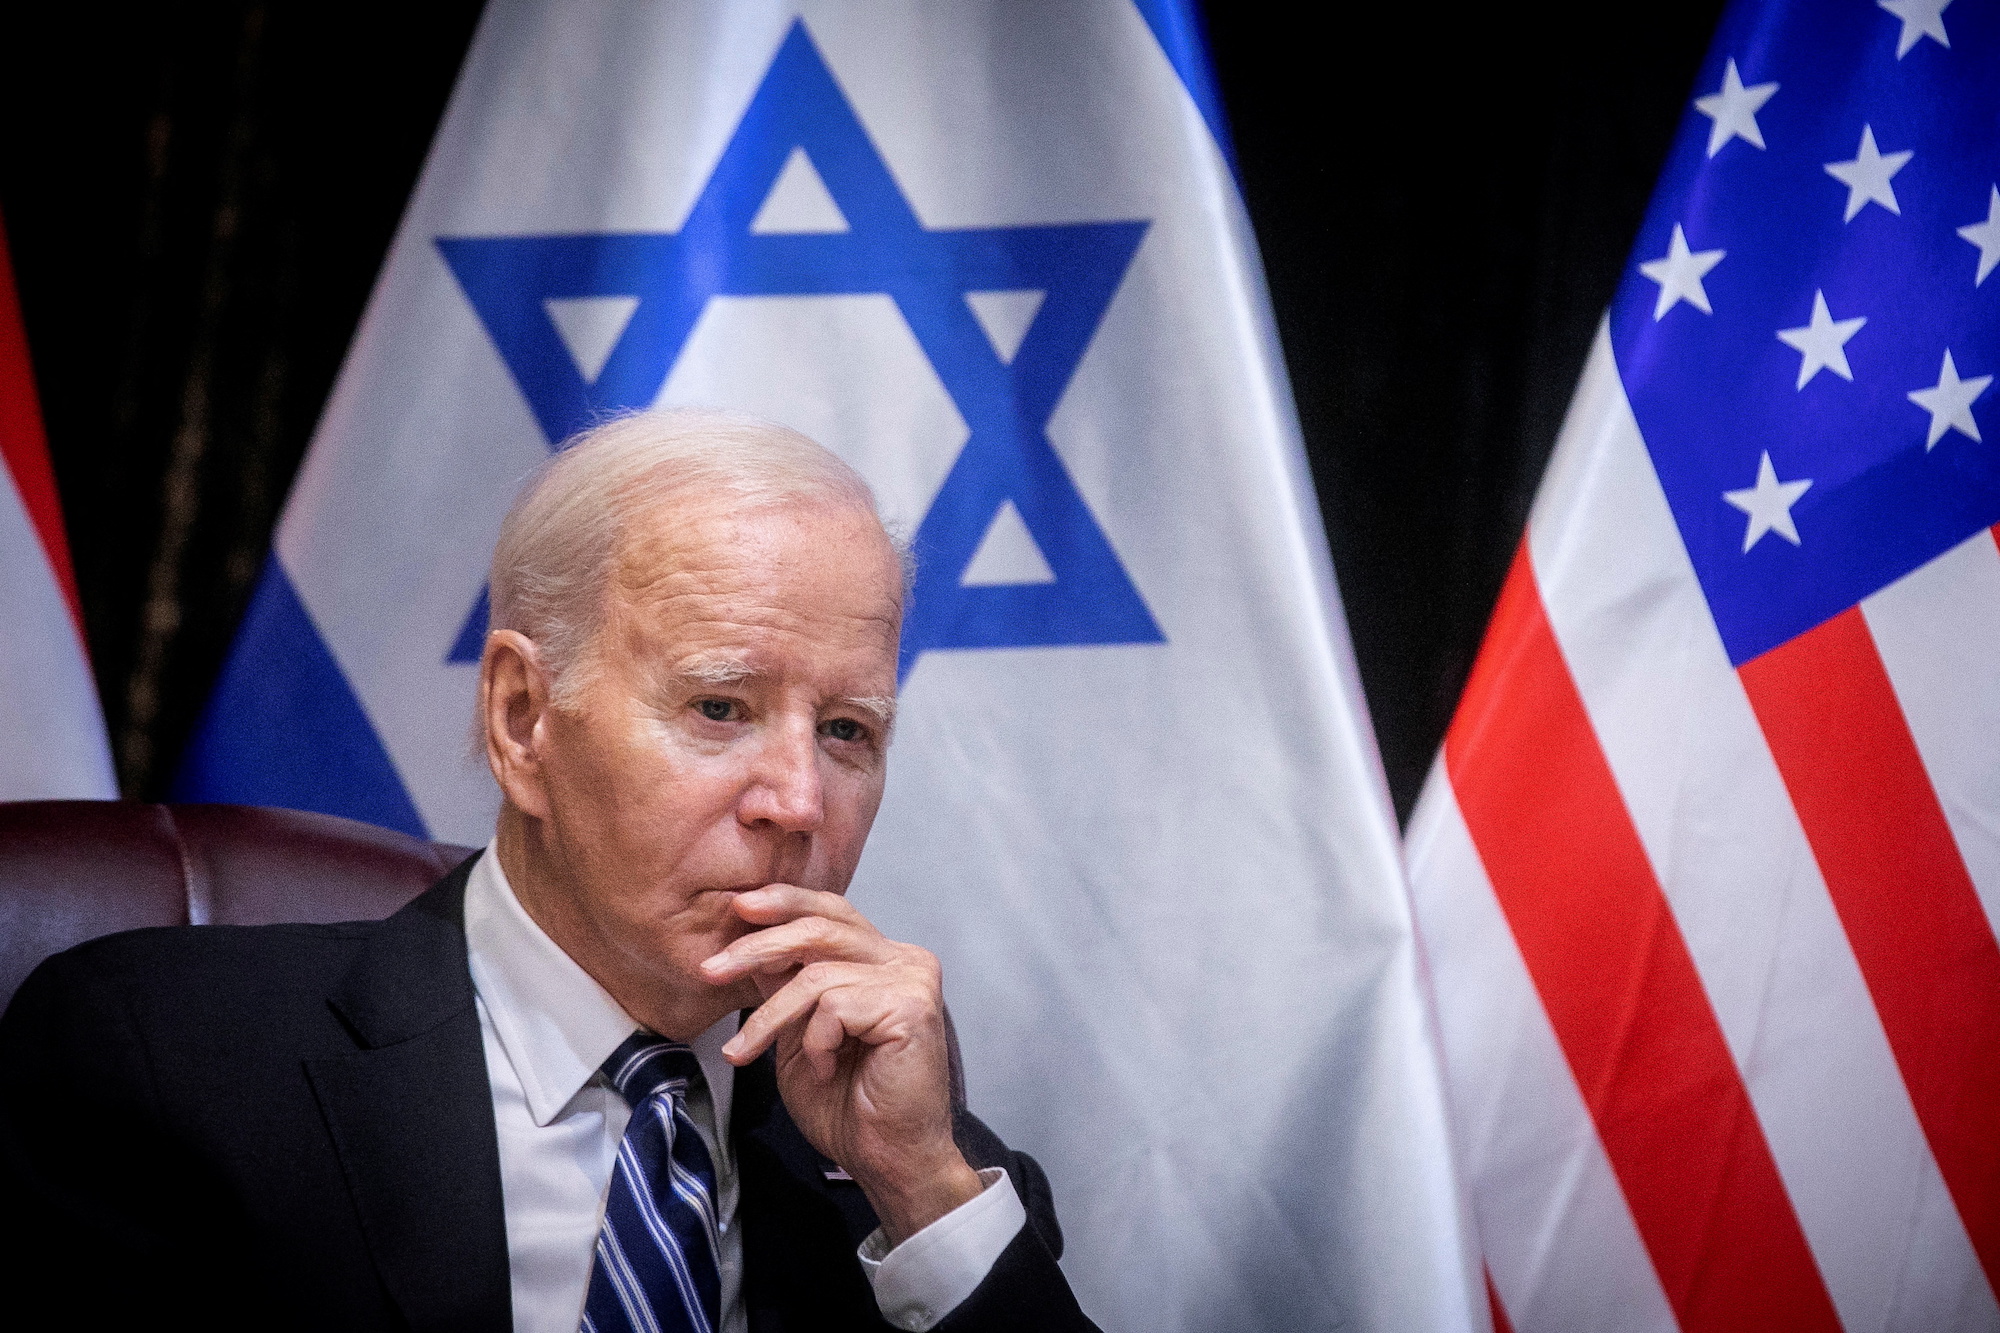 President Joe Biden pauses during a meeting with Israeli Prime Minister Benjamin Netanyahu in Tel Aviv on October 18.